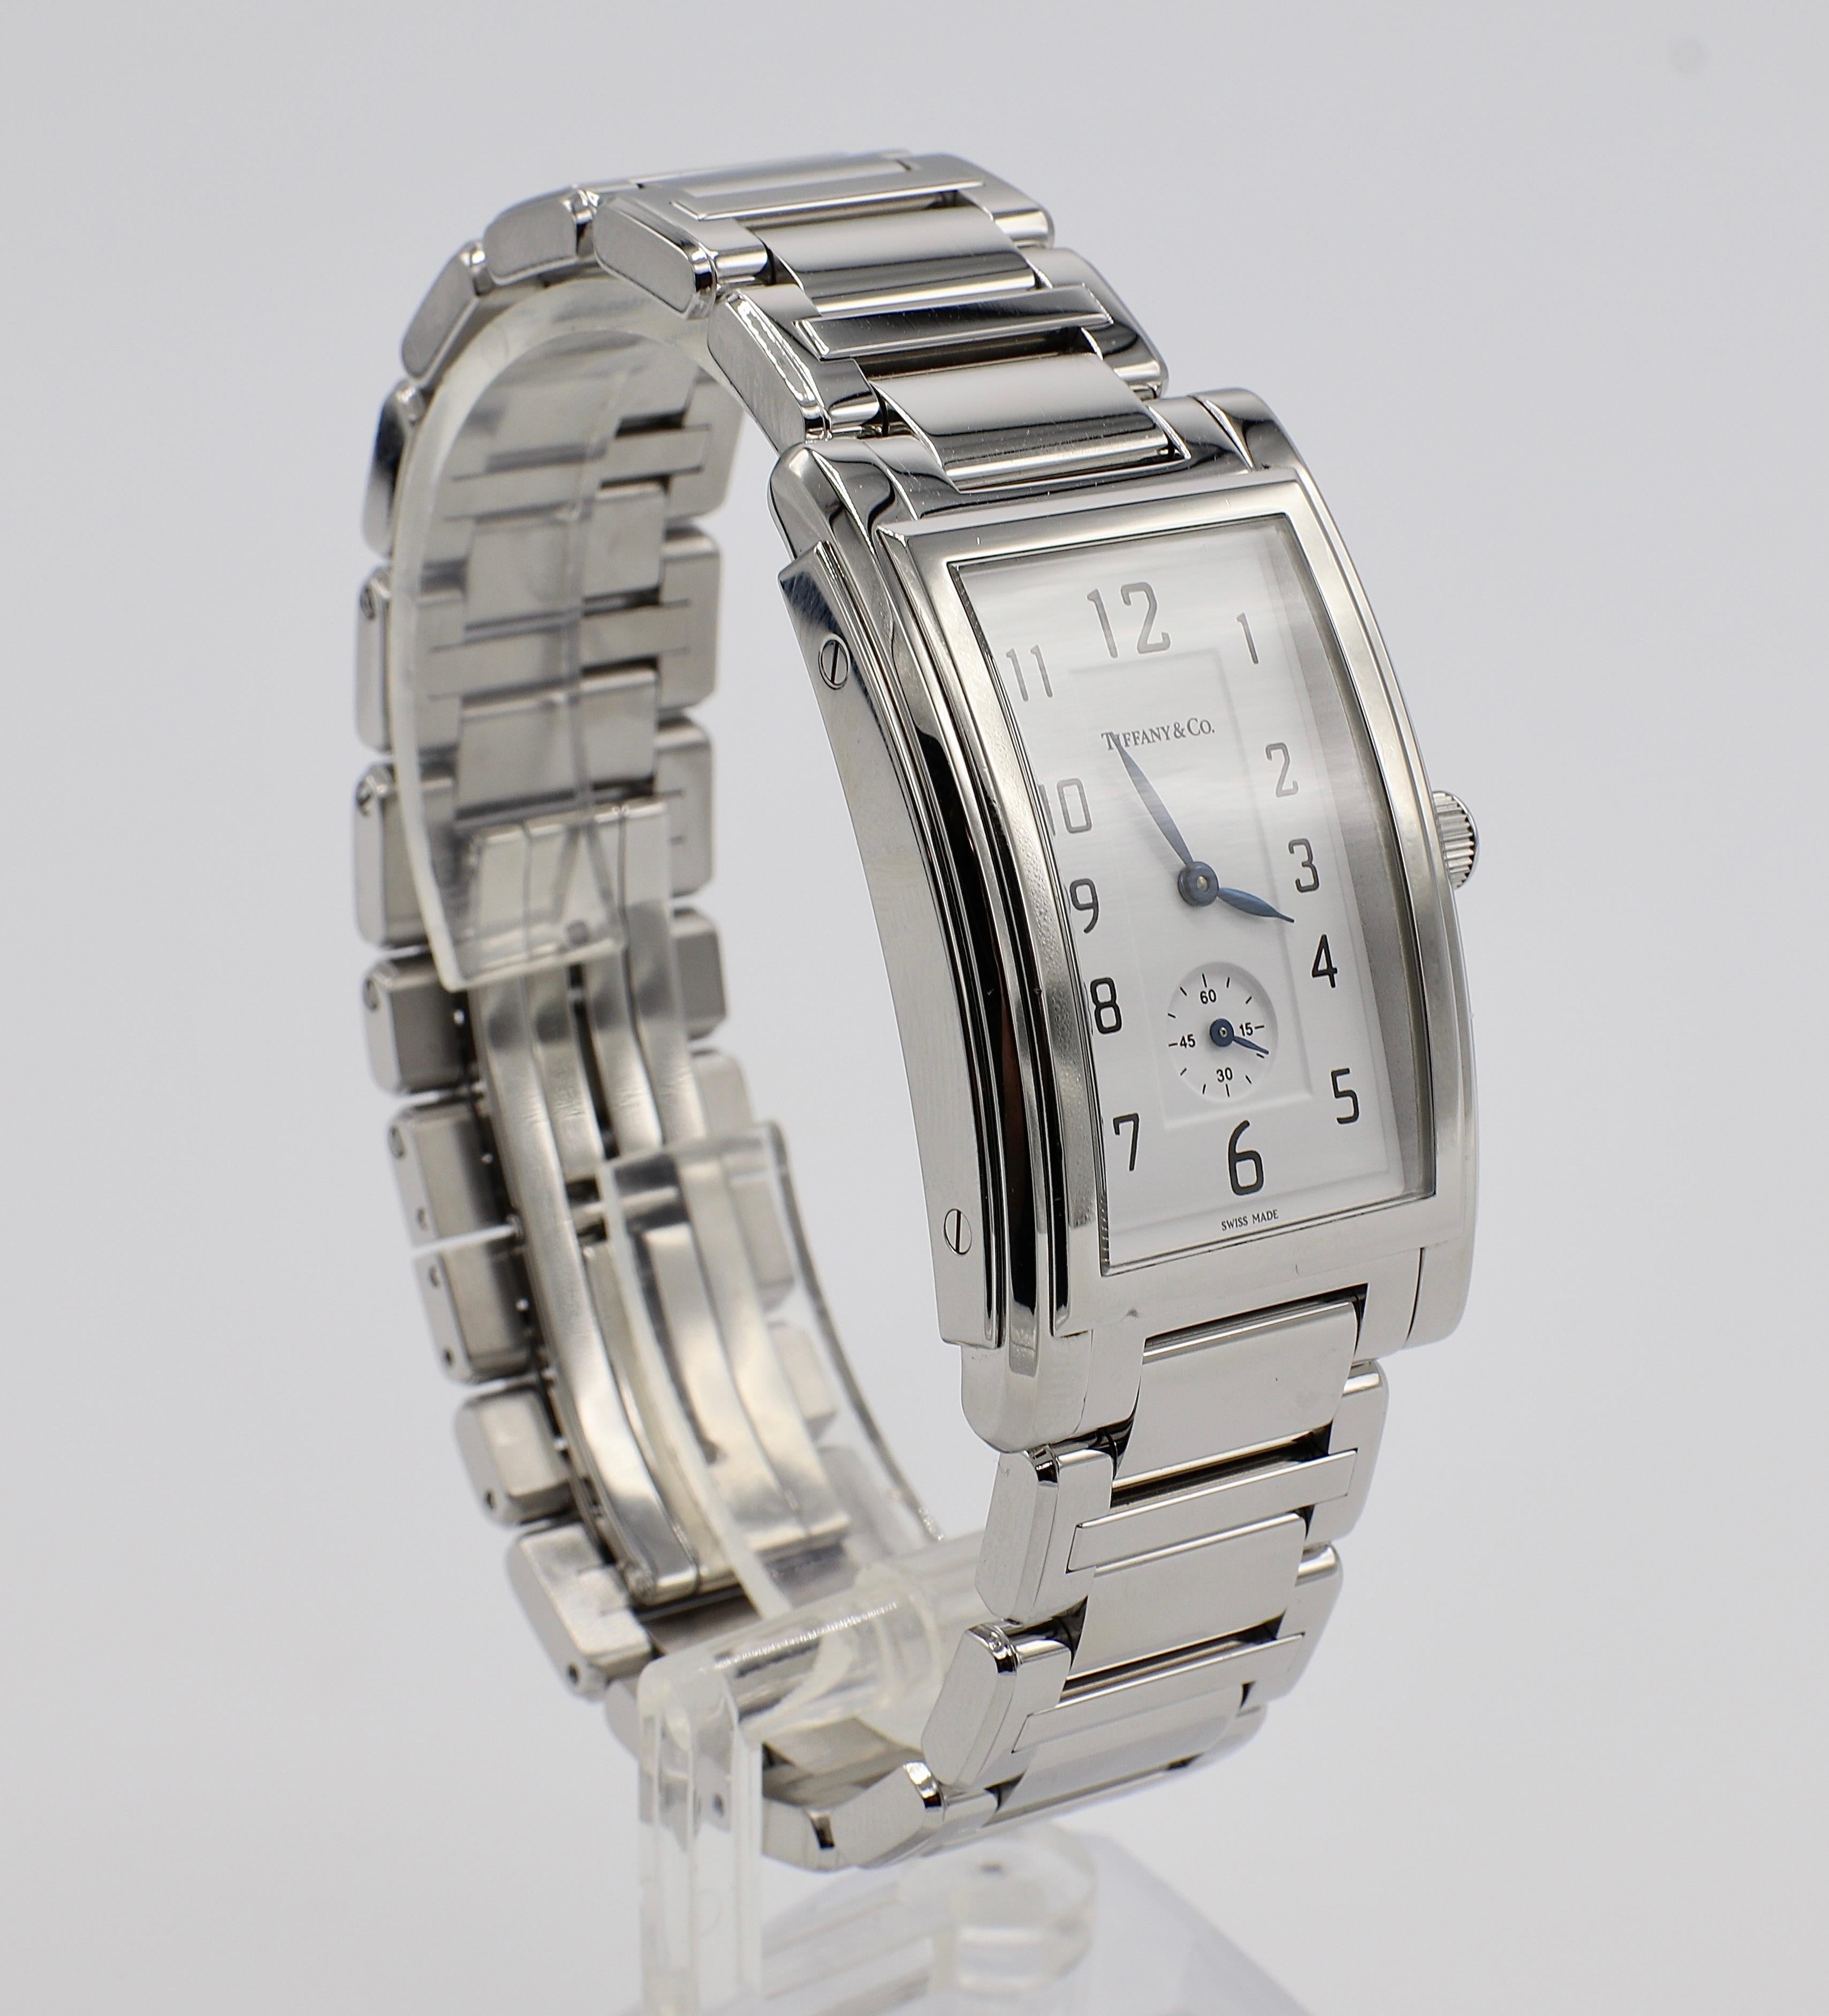 Tiffany & Co. Grand Quartz Resonator Quartz Stainless Steel Watch
Metal: Stainless Steel
Movement: Quartz (battery)
Case: 27 x 43mm
Dial: White
Swiss Made

